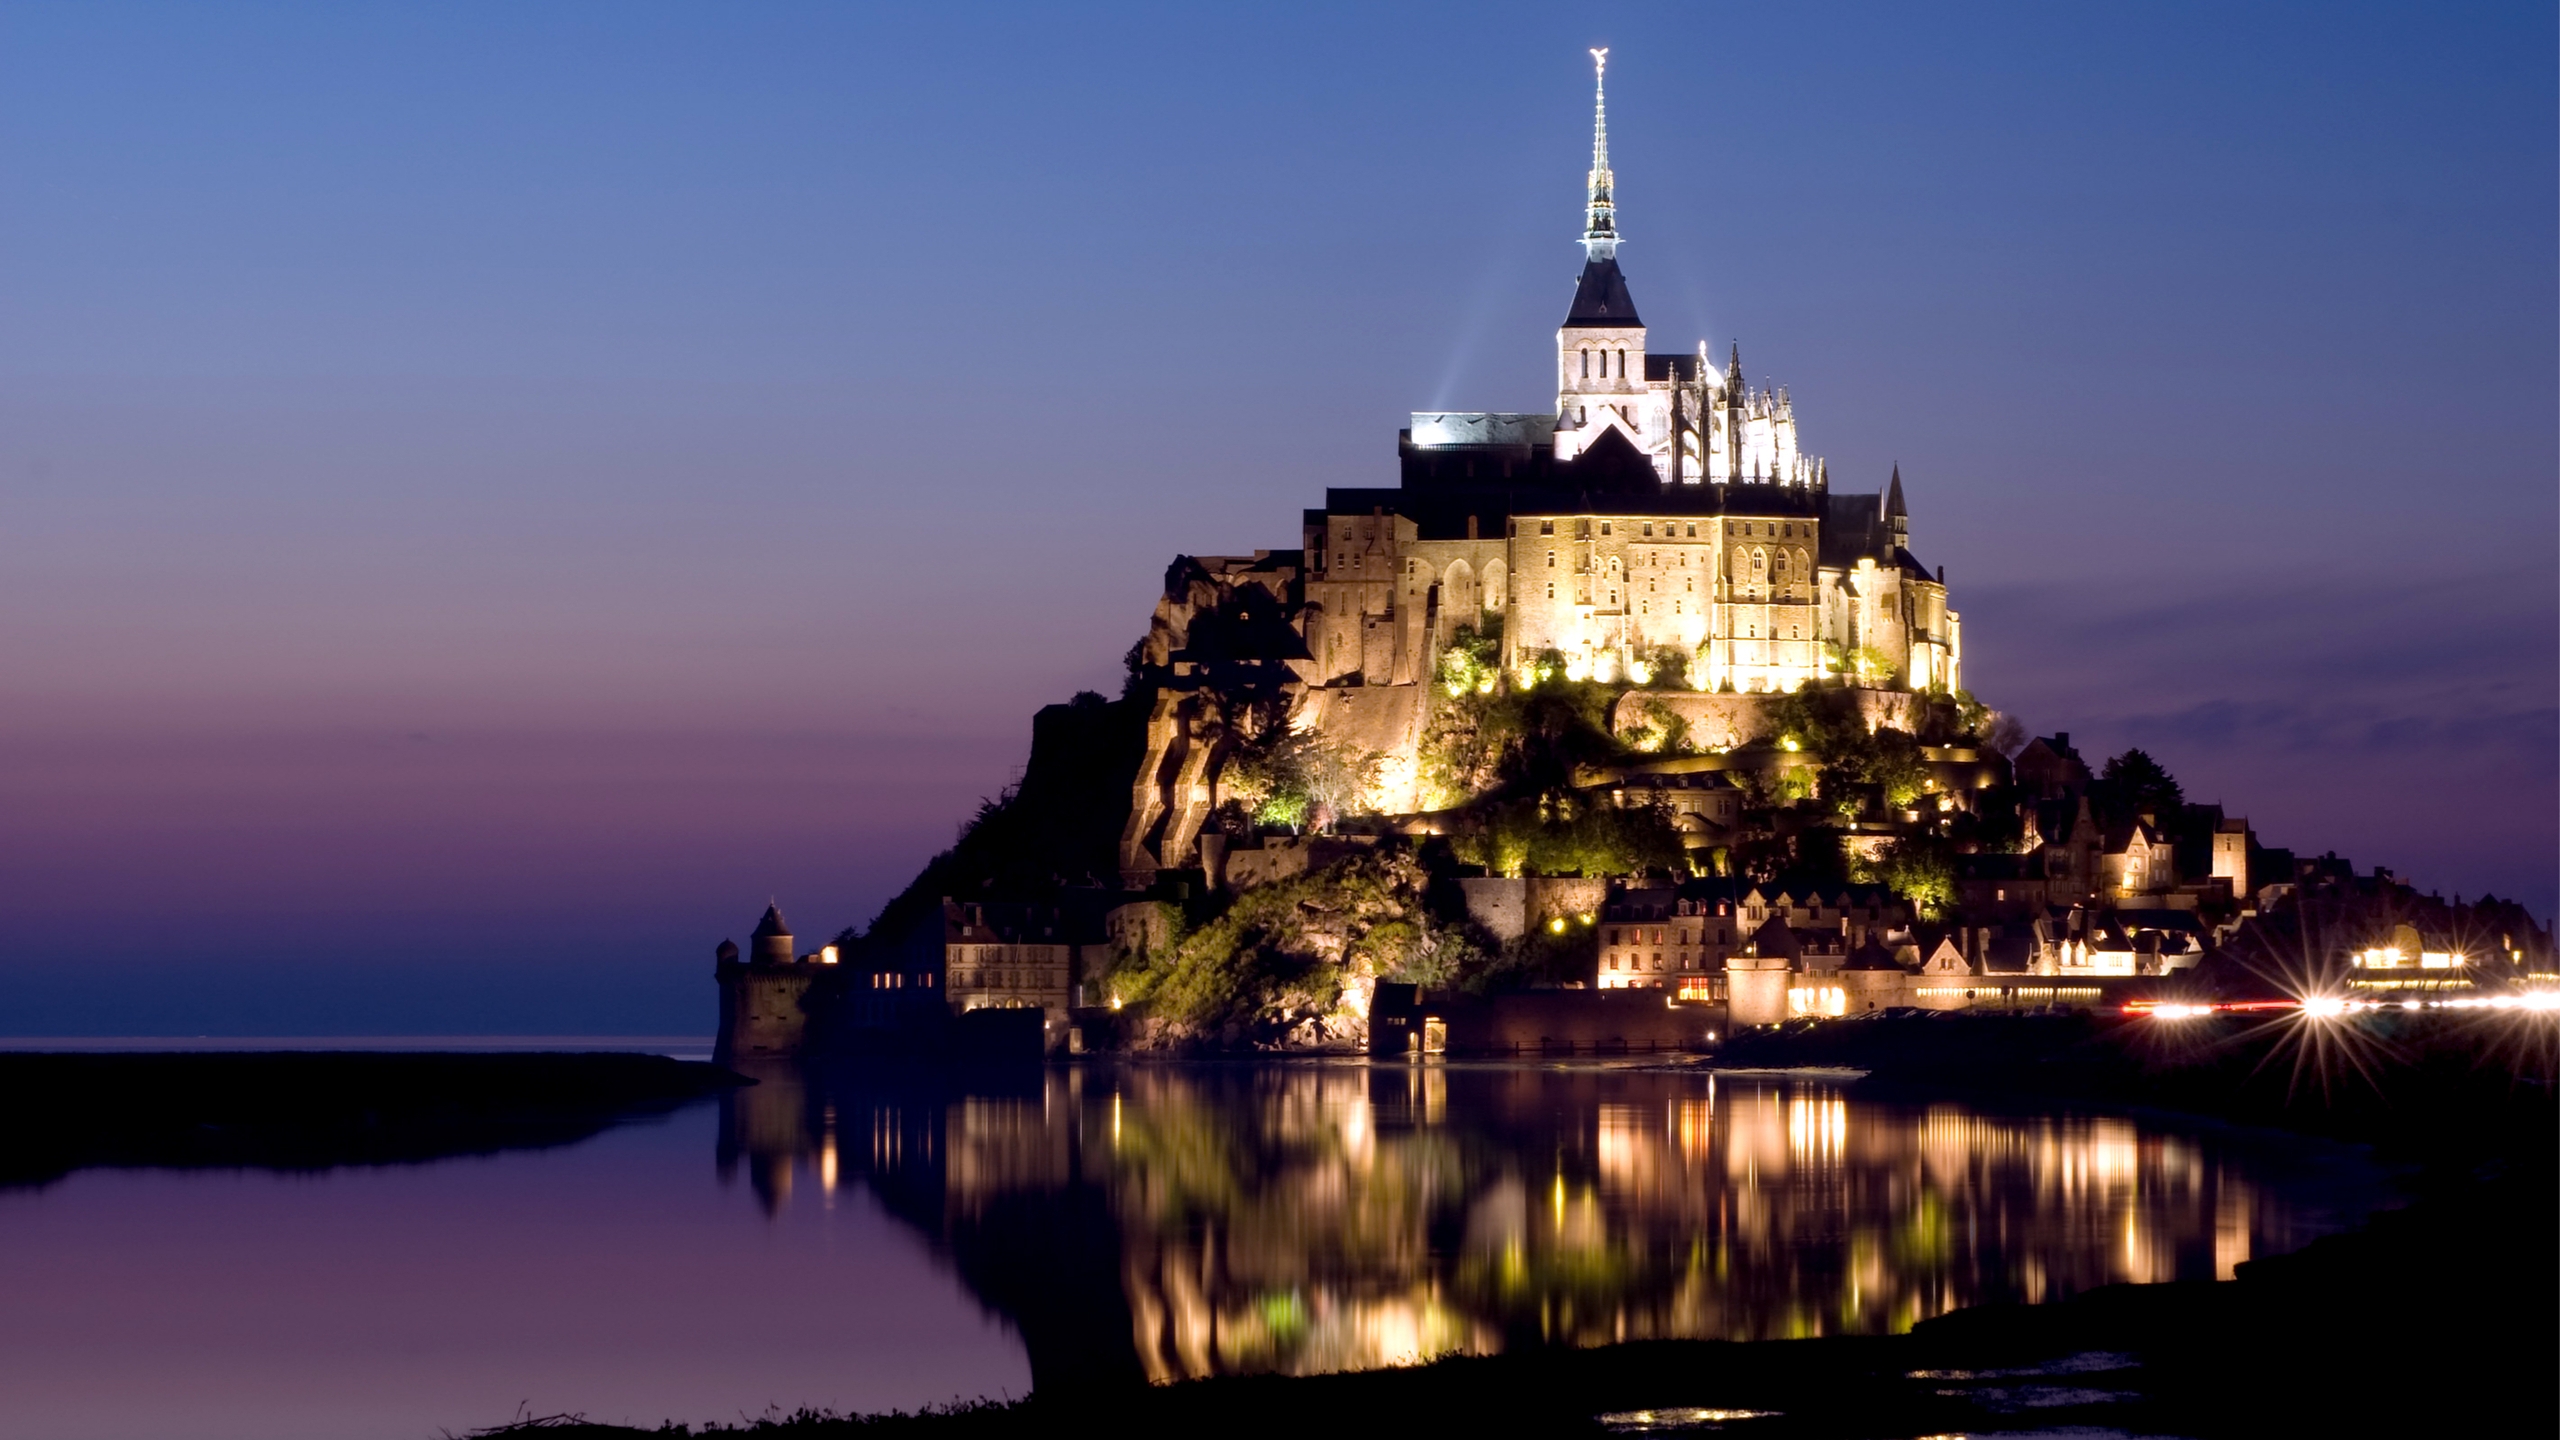 Mont Saint Michel for 2560x1440 HDTV resolution